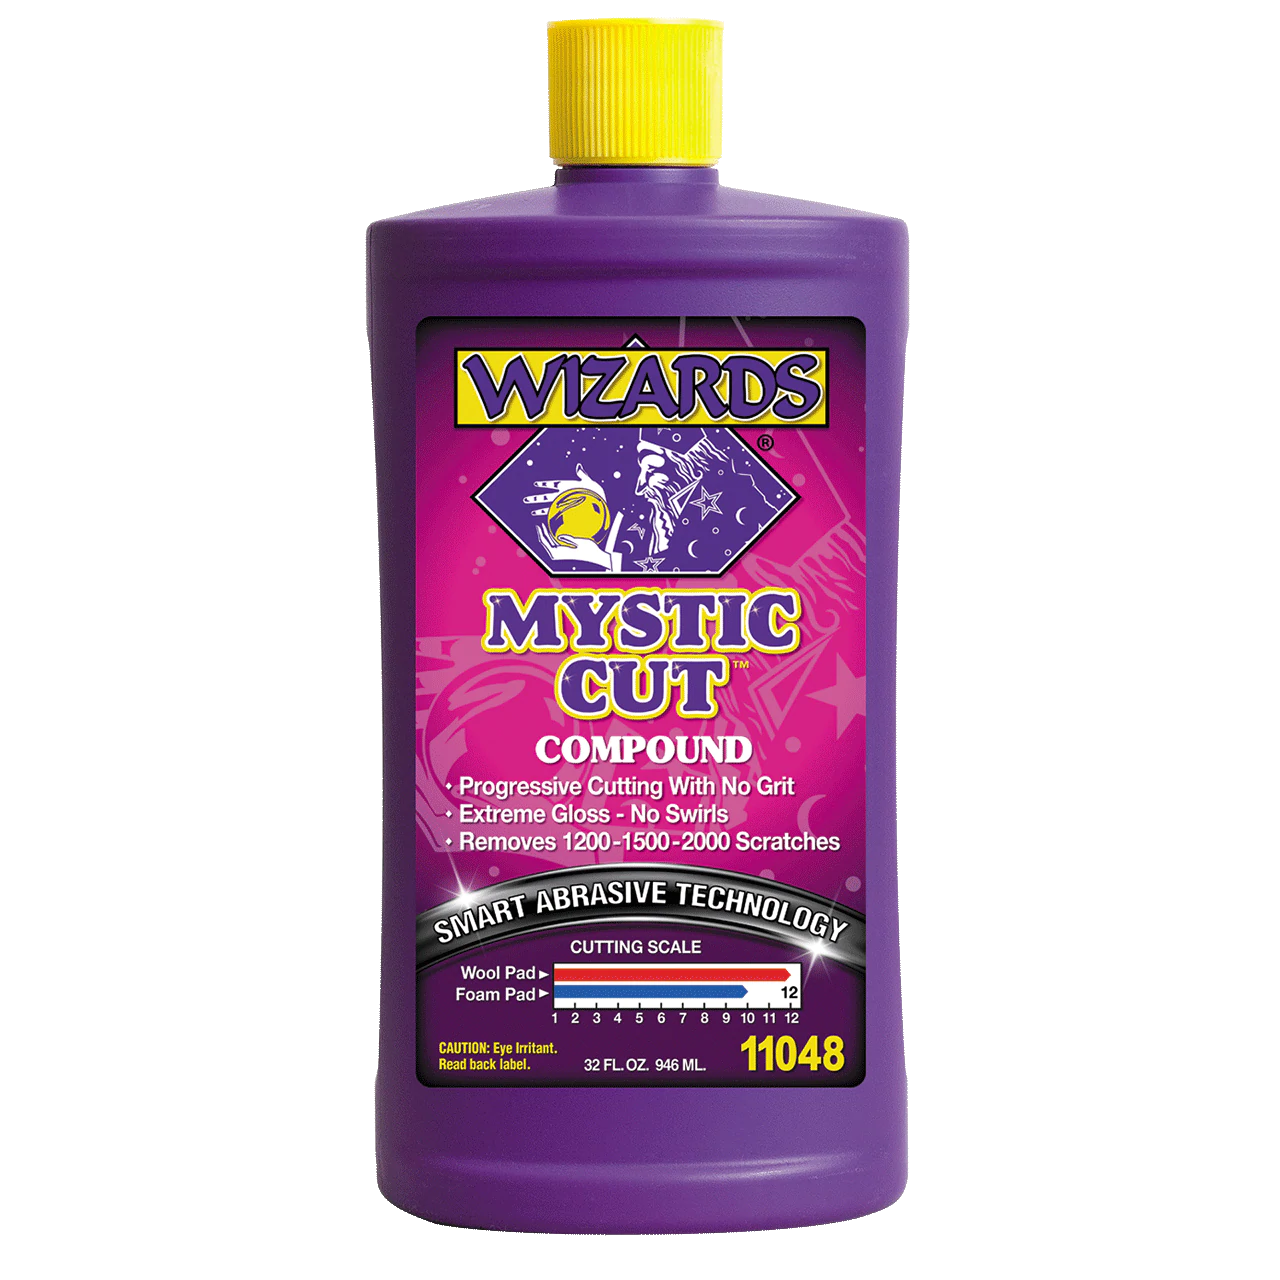 Wizards Mystic Cut Compound